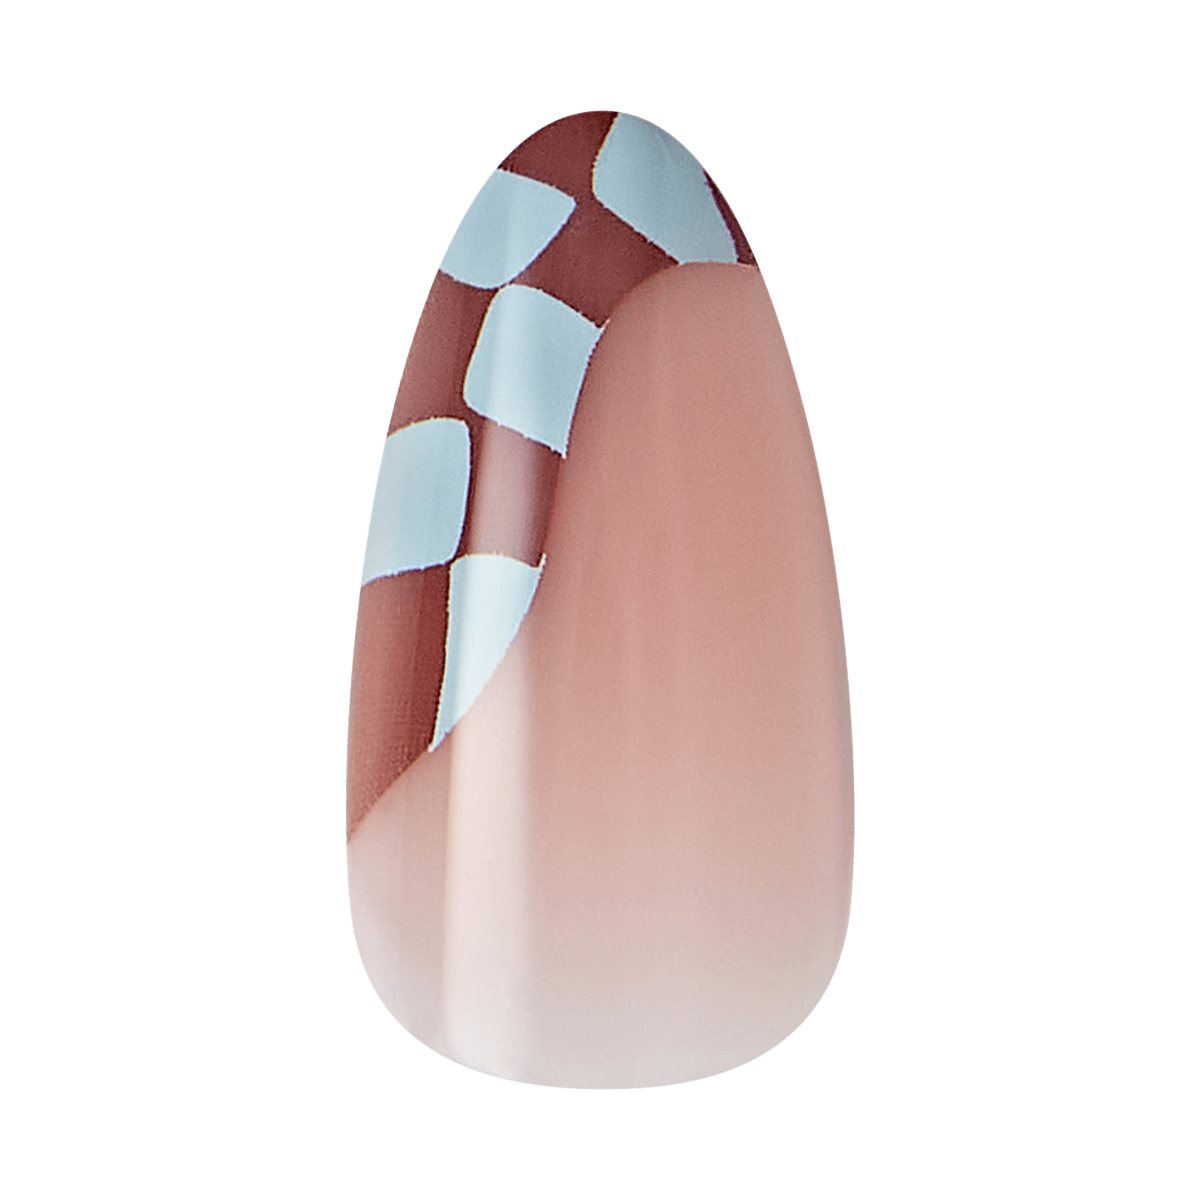 Salon Design Nails- Made U Look